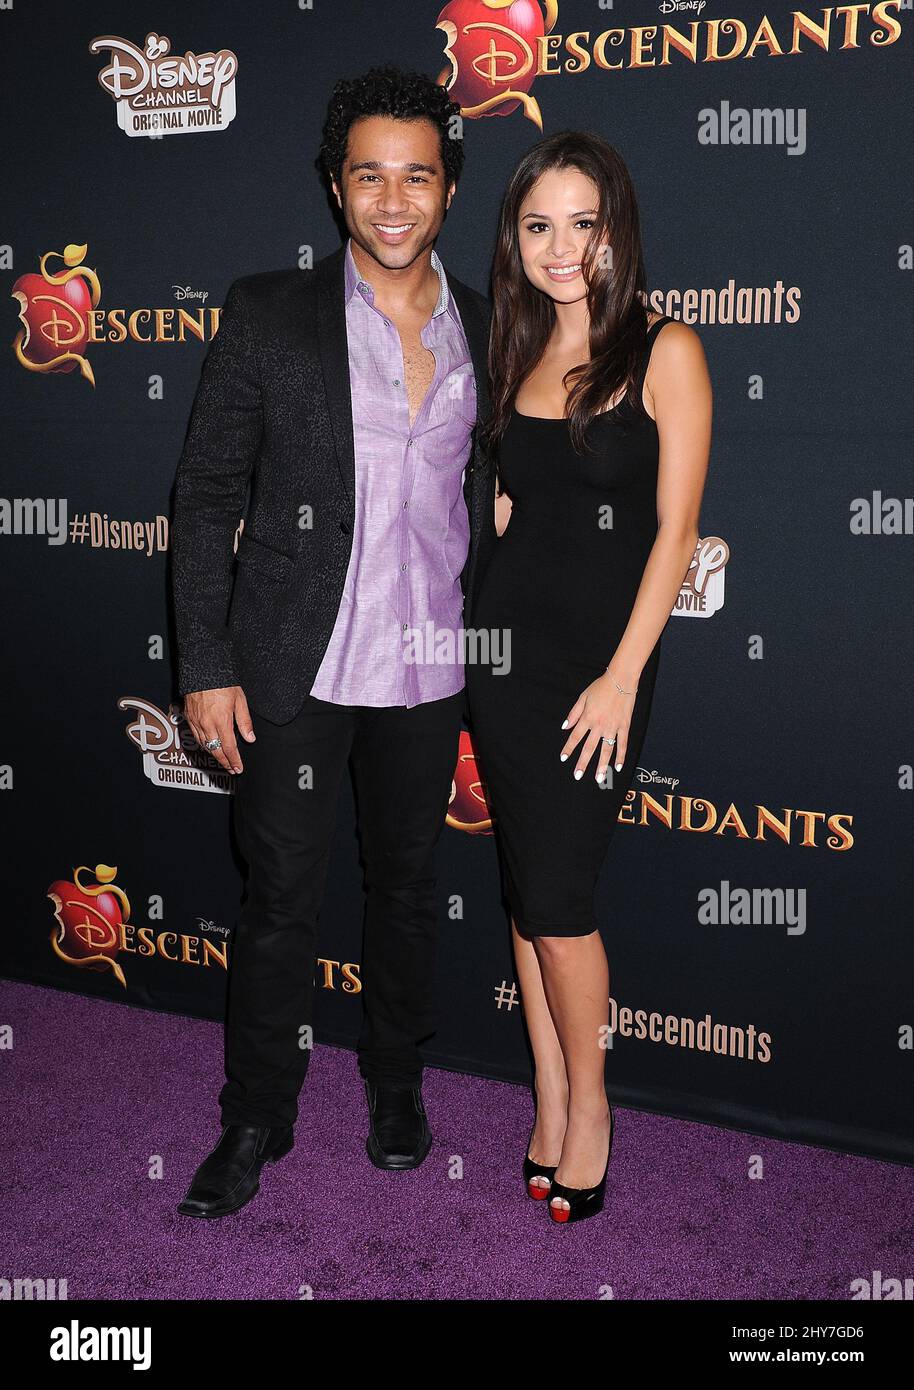 Corbin Bleu and Sasha Clements attending the premiere of Descendants in Burbank, California. Stock Photo